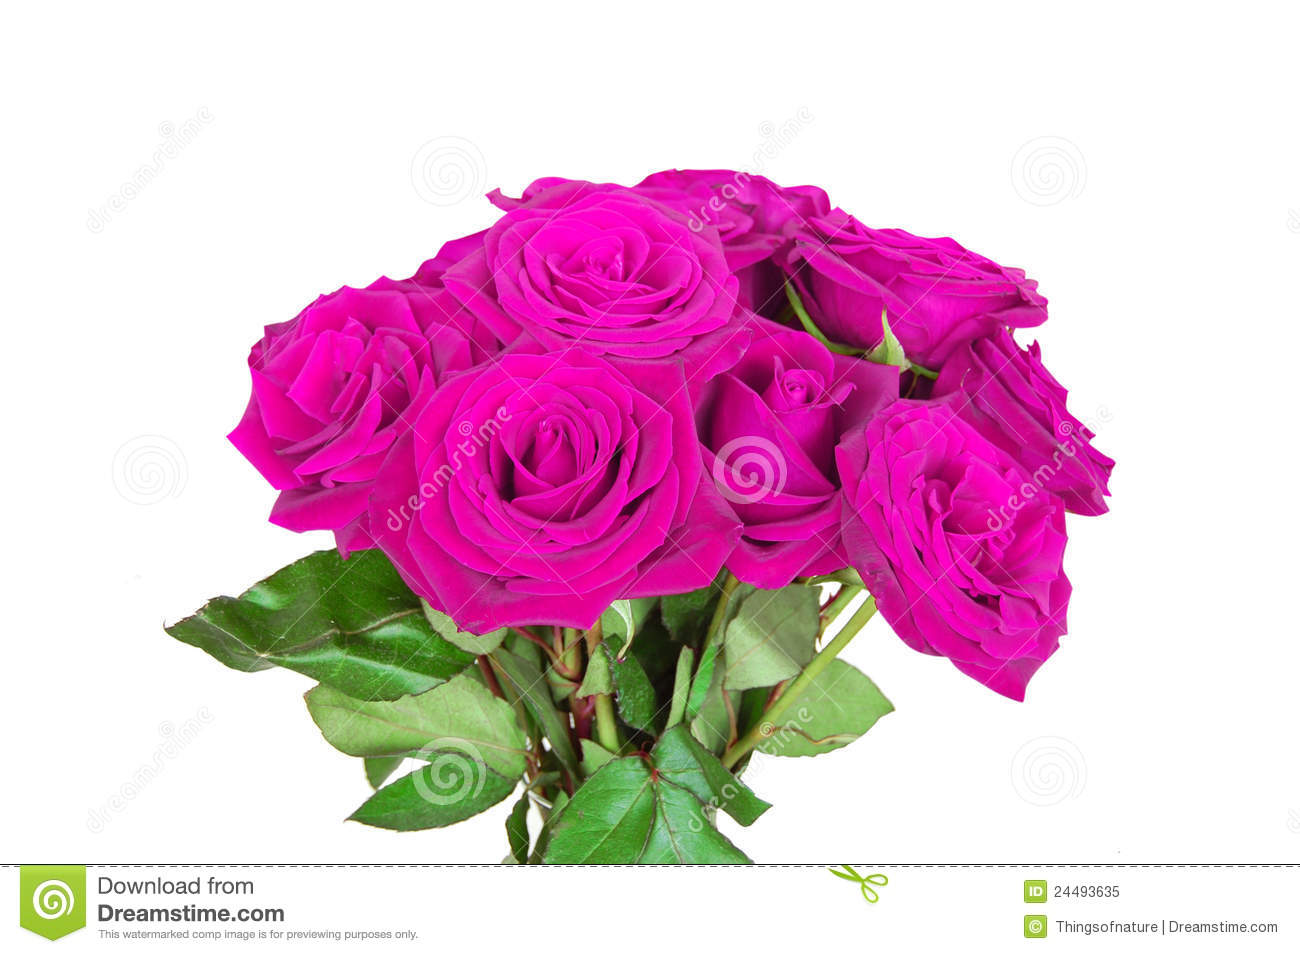 Purple Pink Roses Royalty Free Stock Photo   Image  24493635